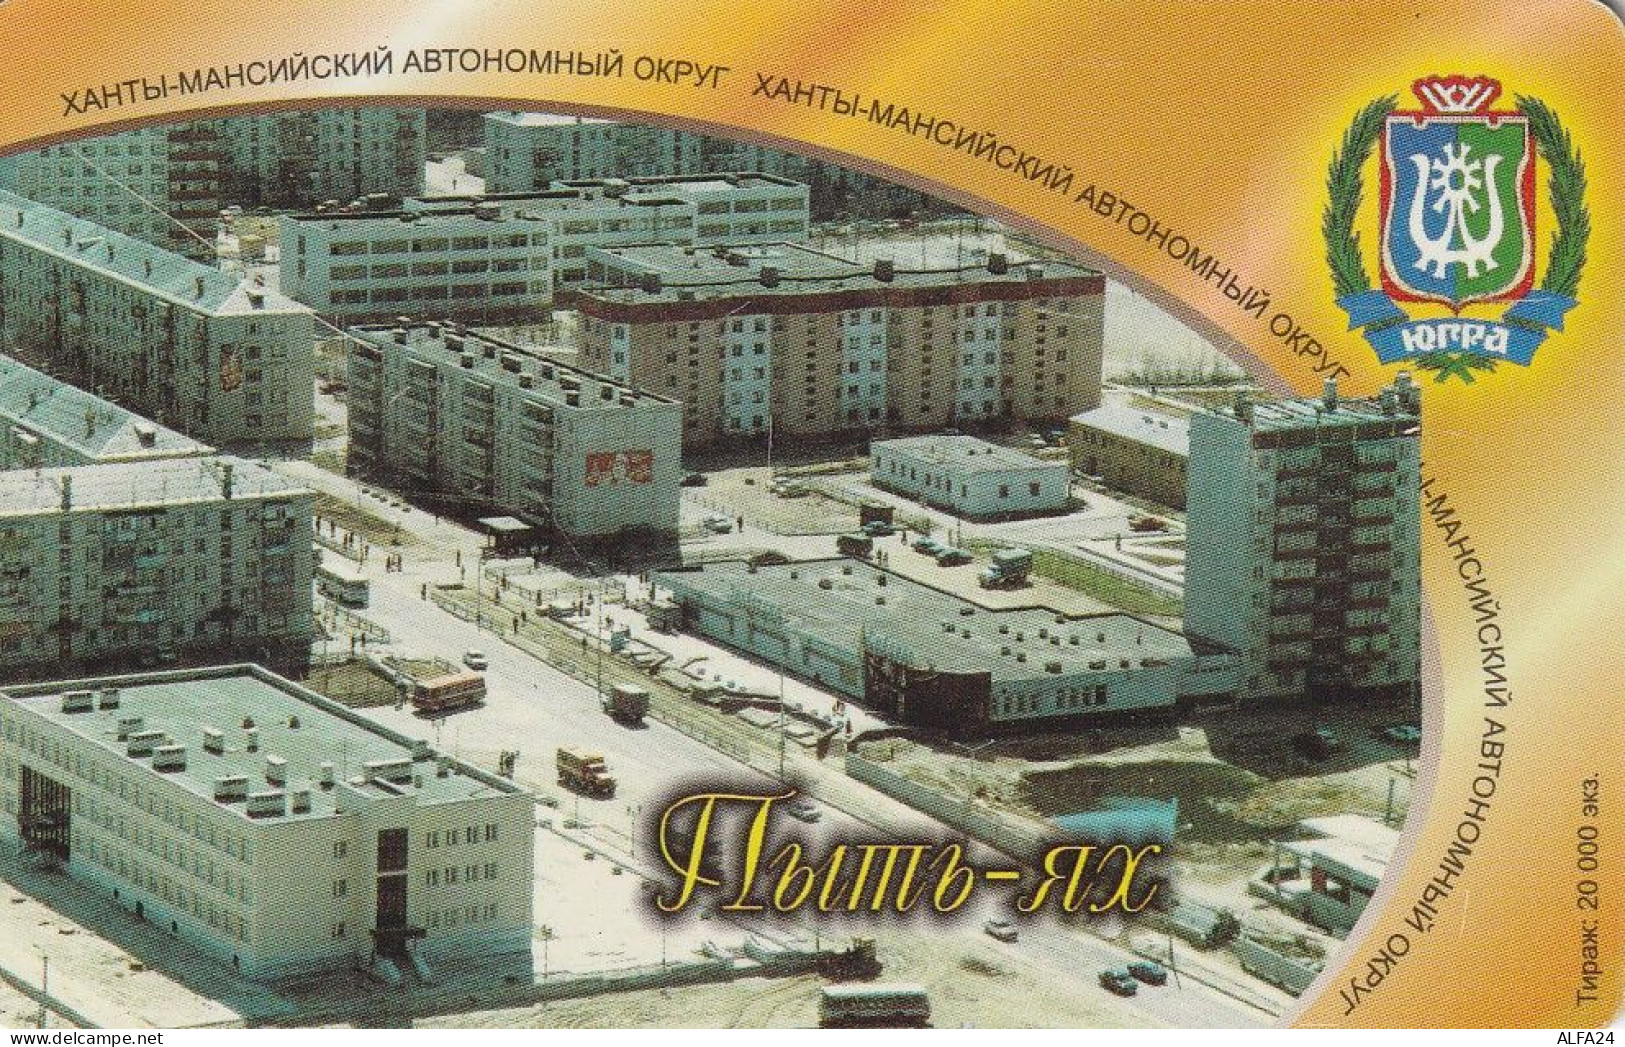 PHONE CARD RUSSIA Khantymansiyskokrtelecom (E9.18.5 - Russie